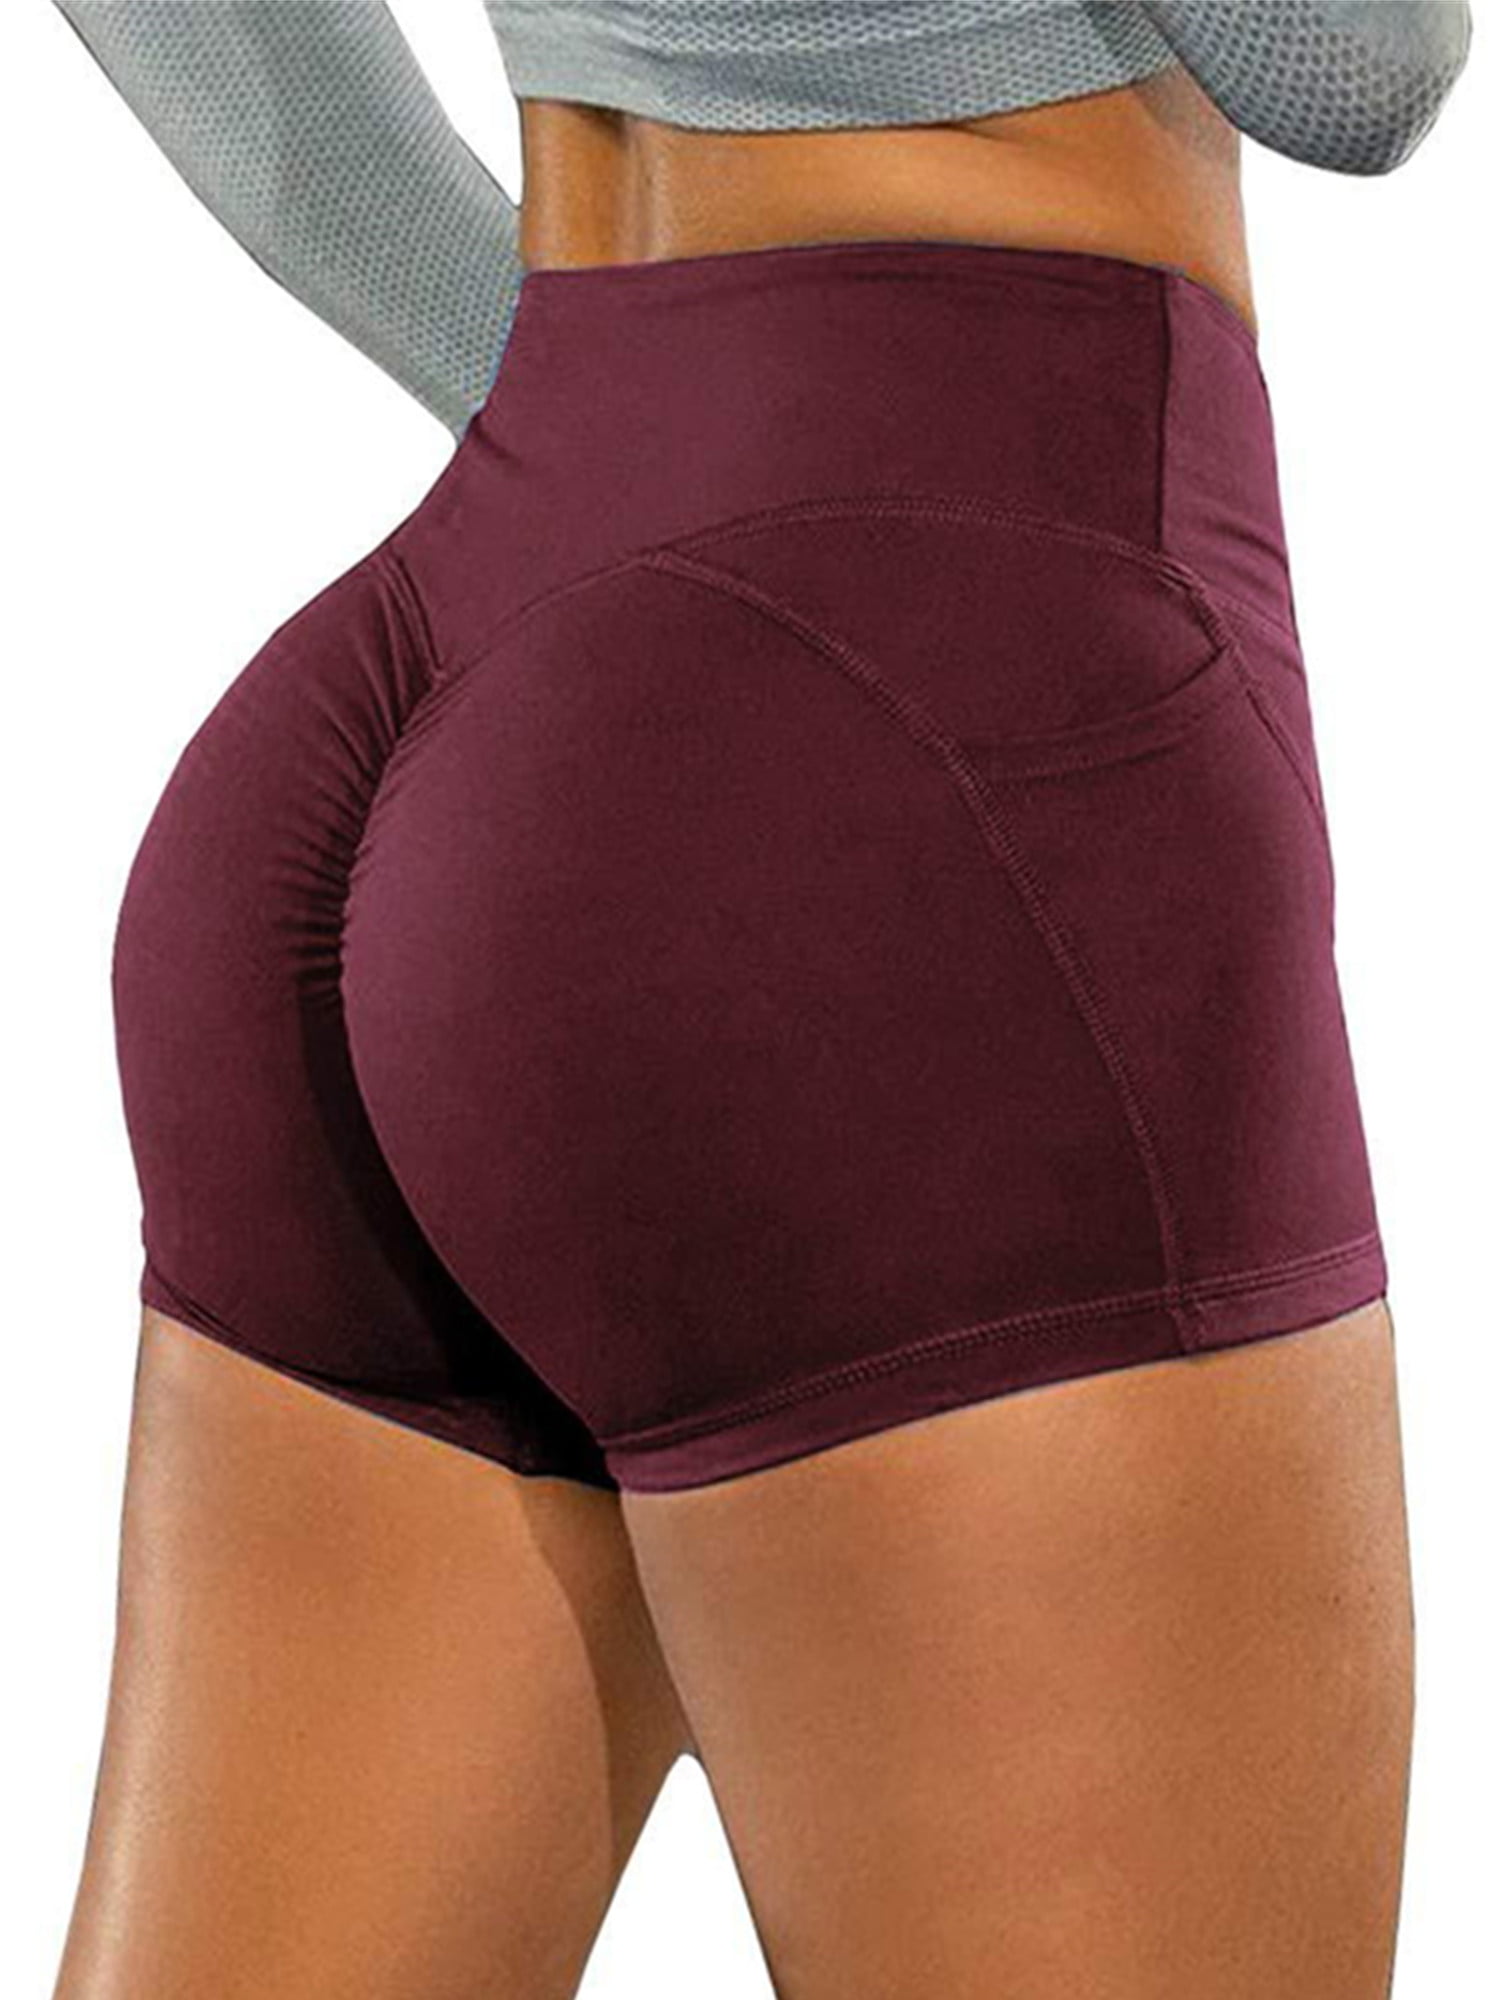 Women Push Up Yoga Shorts Scrunch Sports Hot Pants Booty Gym Run Fitness Briefs 